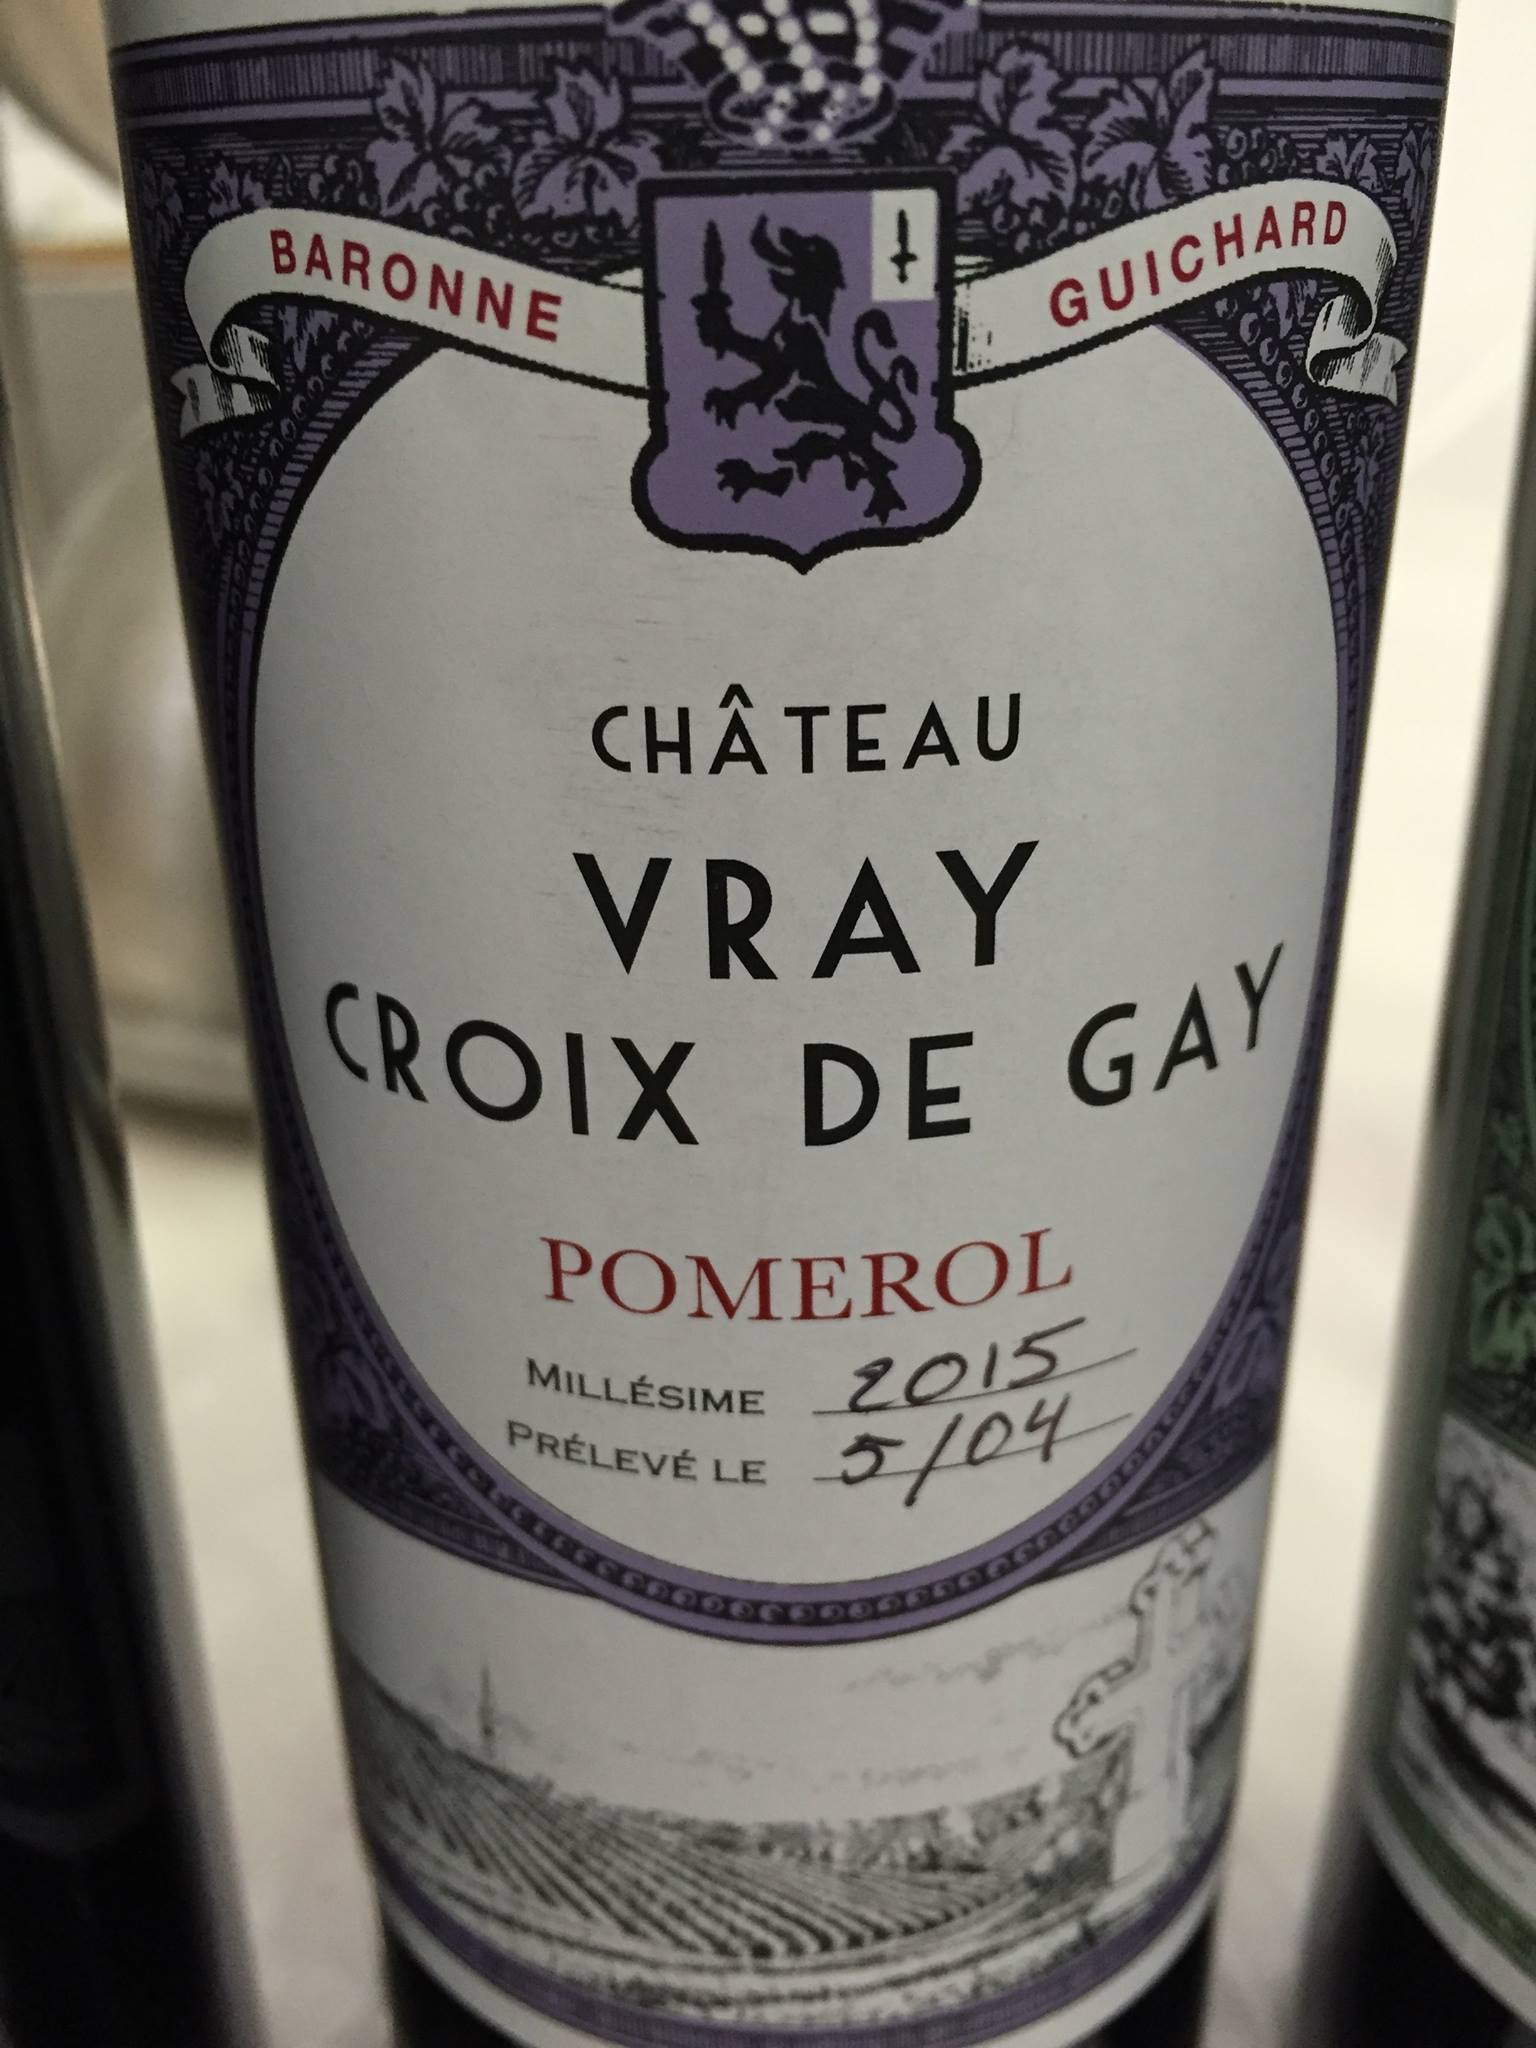 Château Vray Croix de Gay 2015 – Pomerol